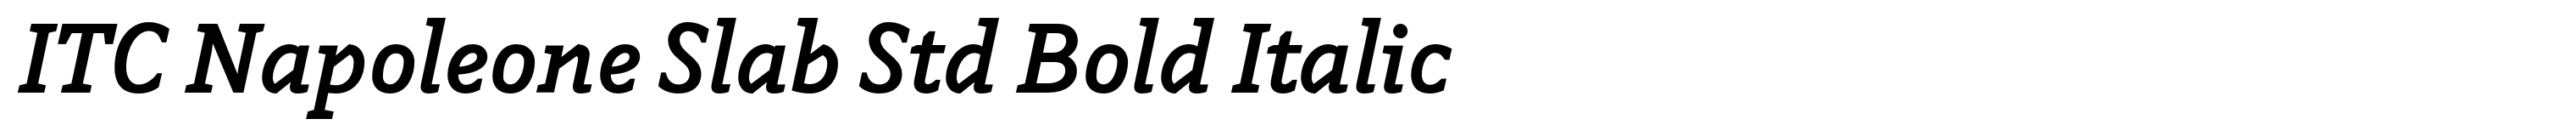 ITC Napoleone Slab Std Bold Italic